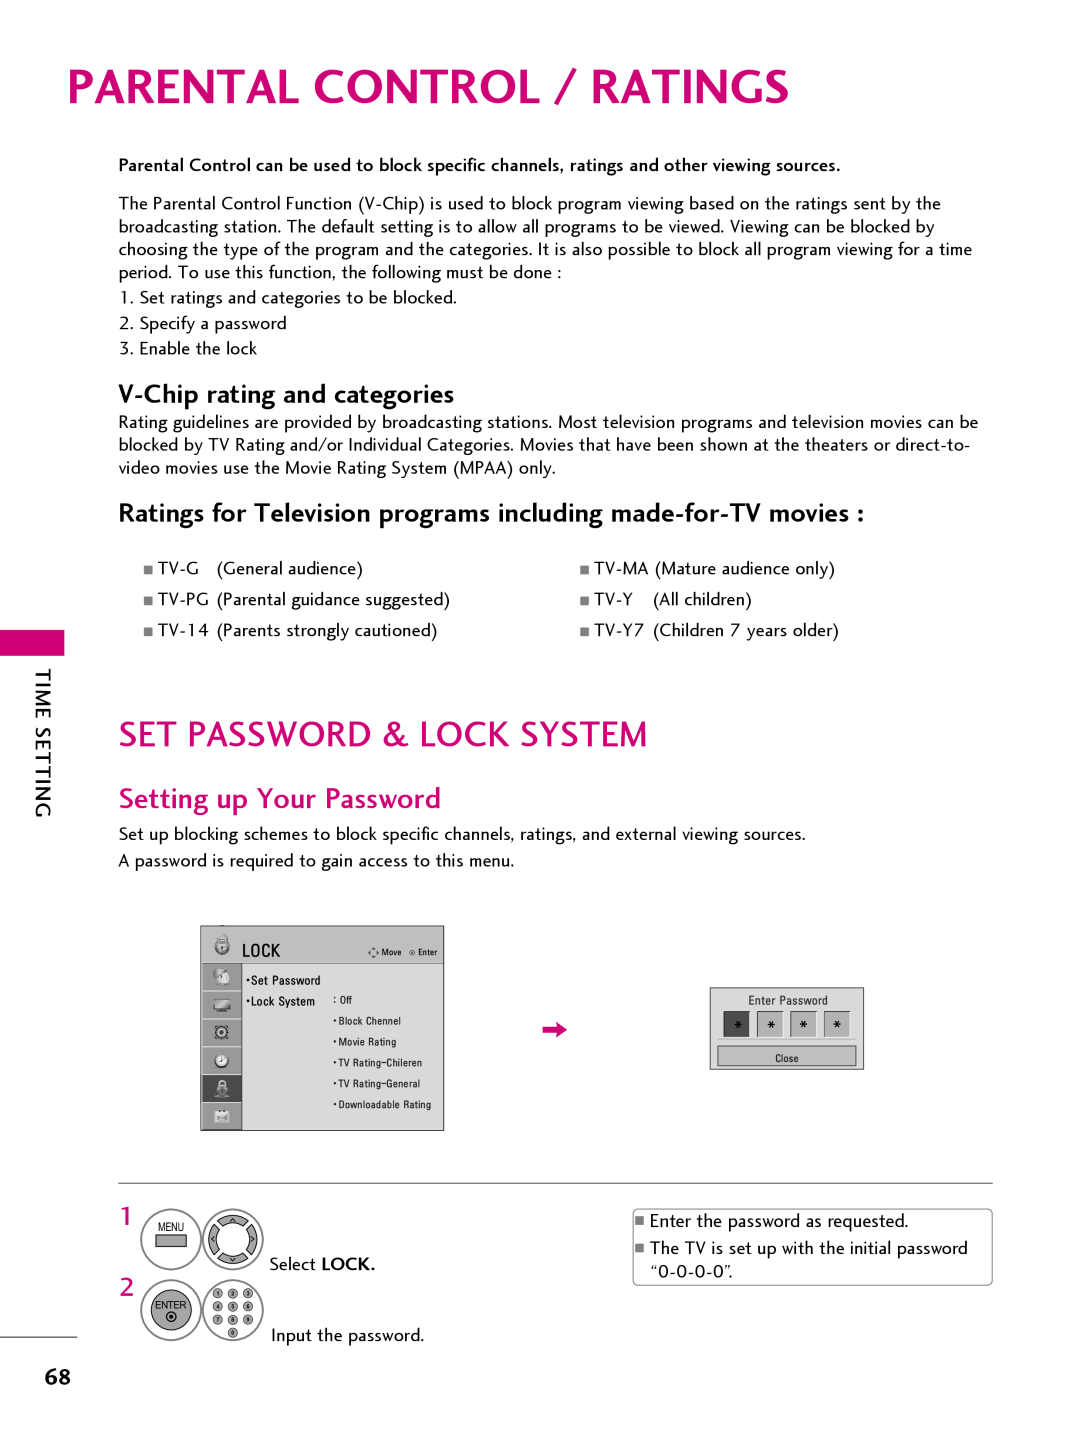 LG Electronics 32LQ630H Parental Control / Ratings, Set Password & Lock System, Setting up Your Password, Select LOCK 